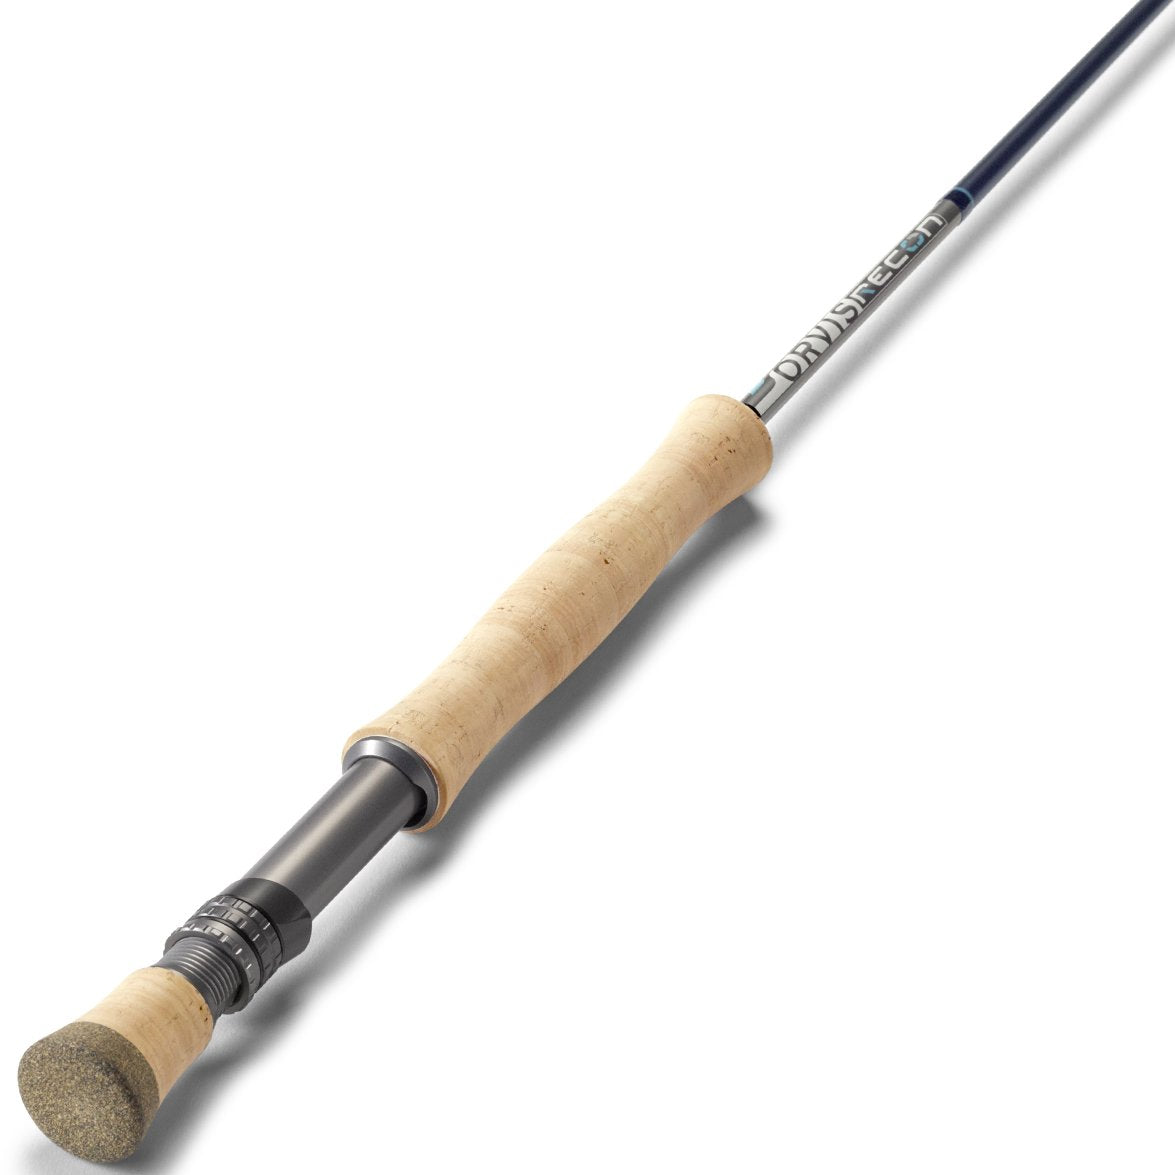 10 feet fishing rod - Buy 10 feet fishing rod at Best Price in Malaysia